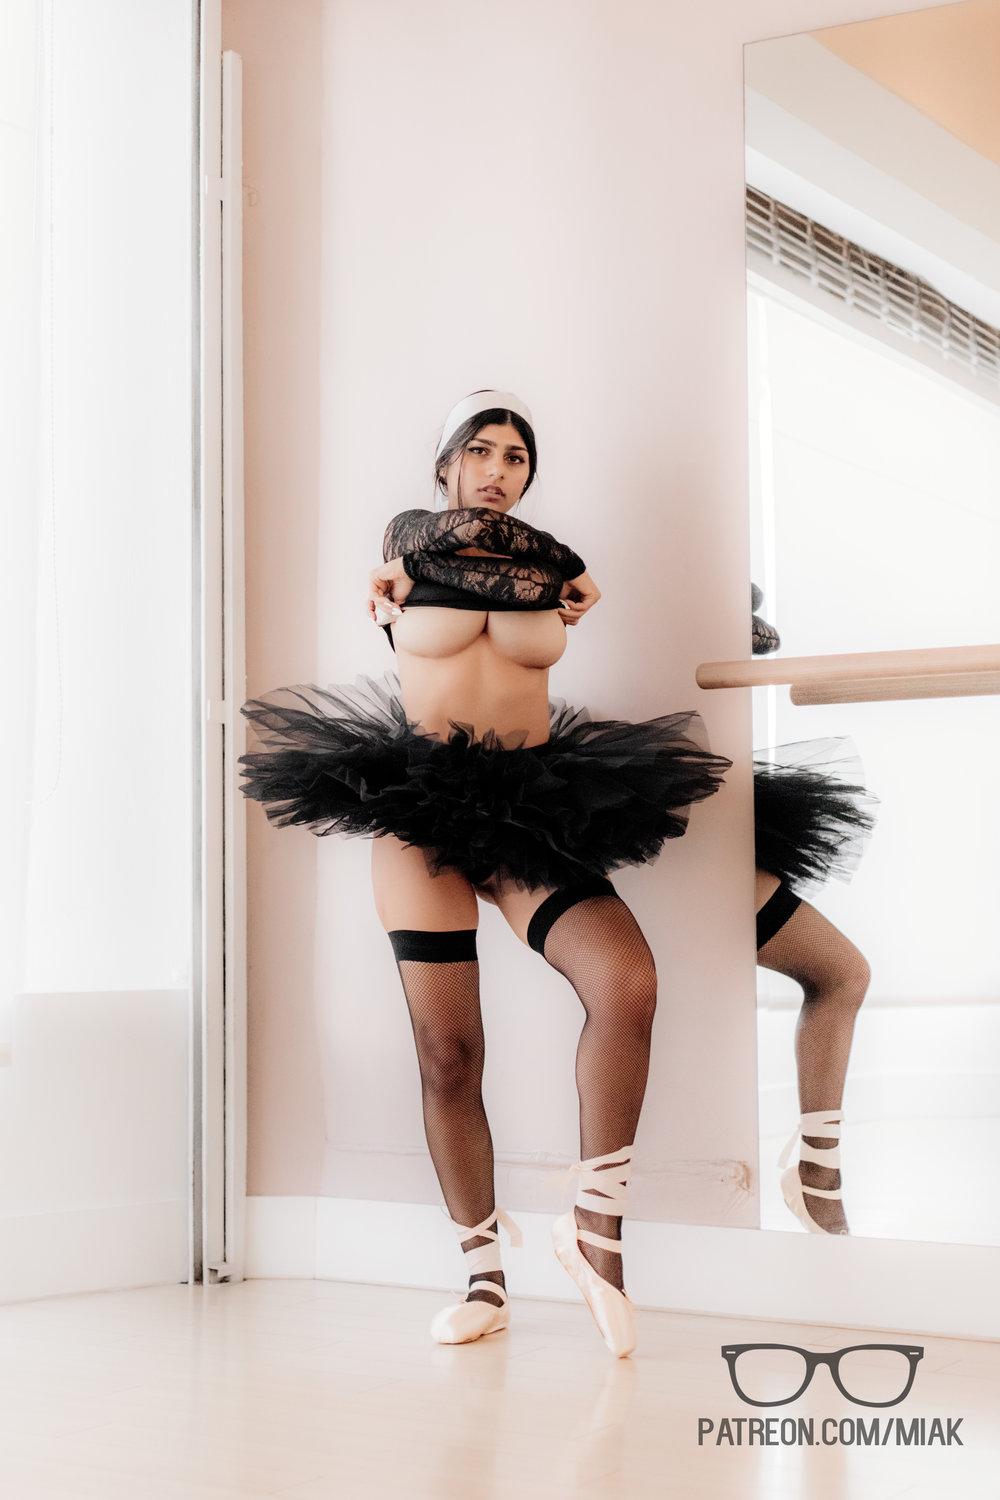 mia khalifa ballet lingerie patreon set leaked OCQFHK